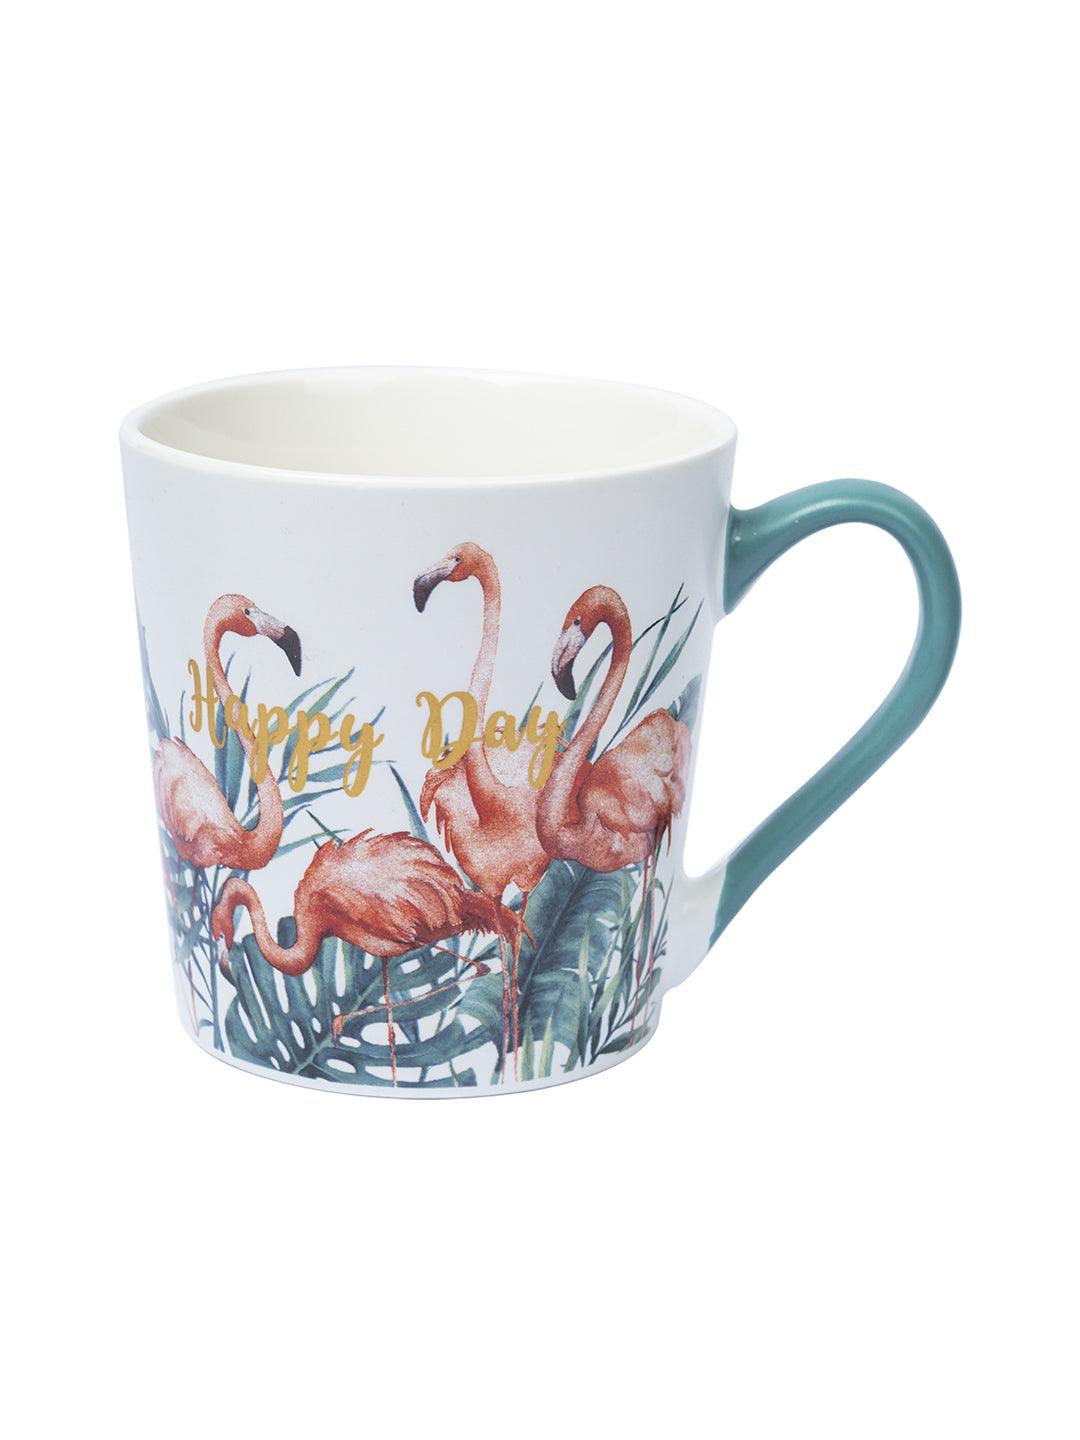 Flamingo Print Ceramic Coffee Mug (400 mL) - NEW SKU's Opened Against "Assorted Product" - MARKET 99